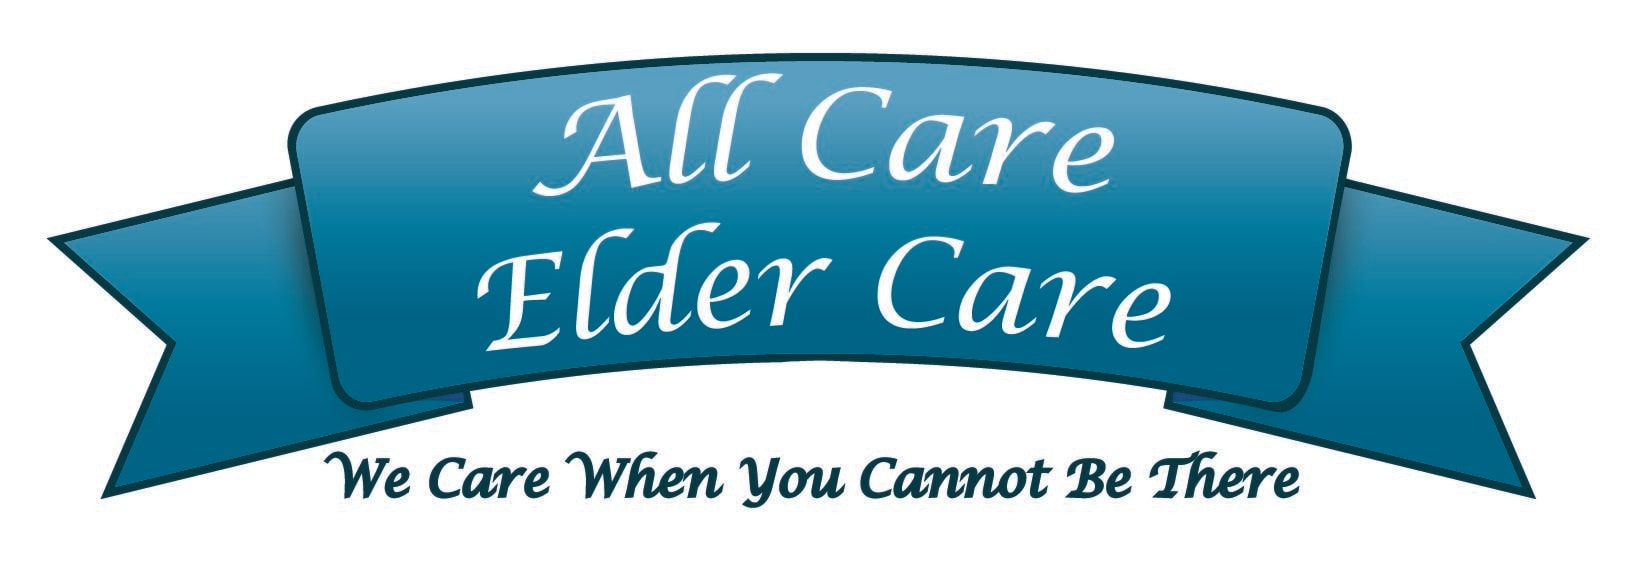 All Care Elder Care